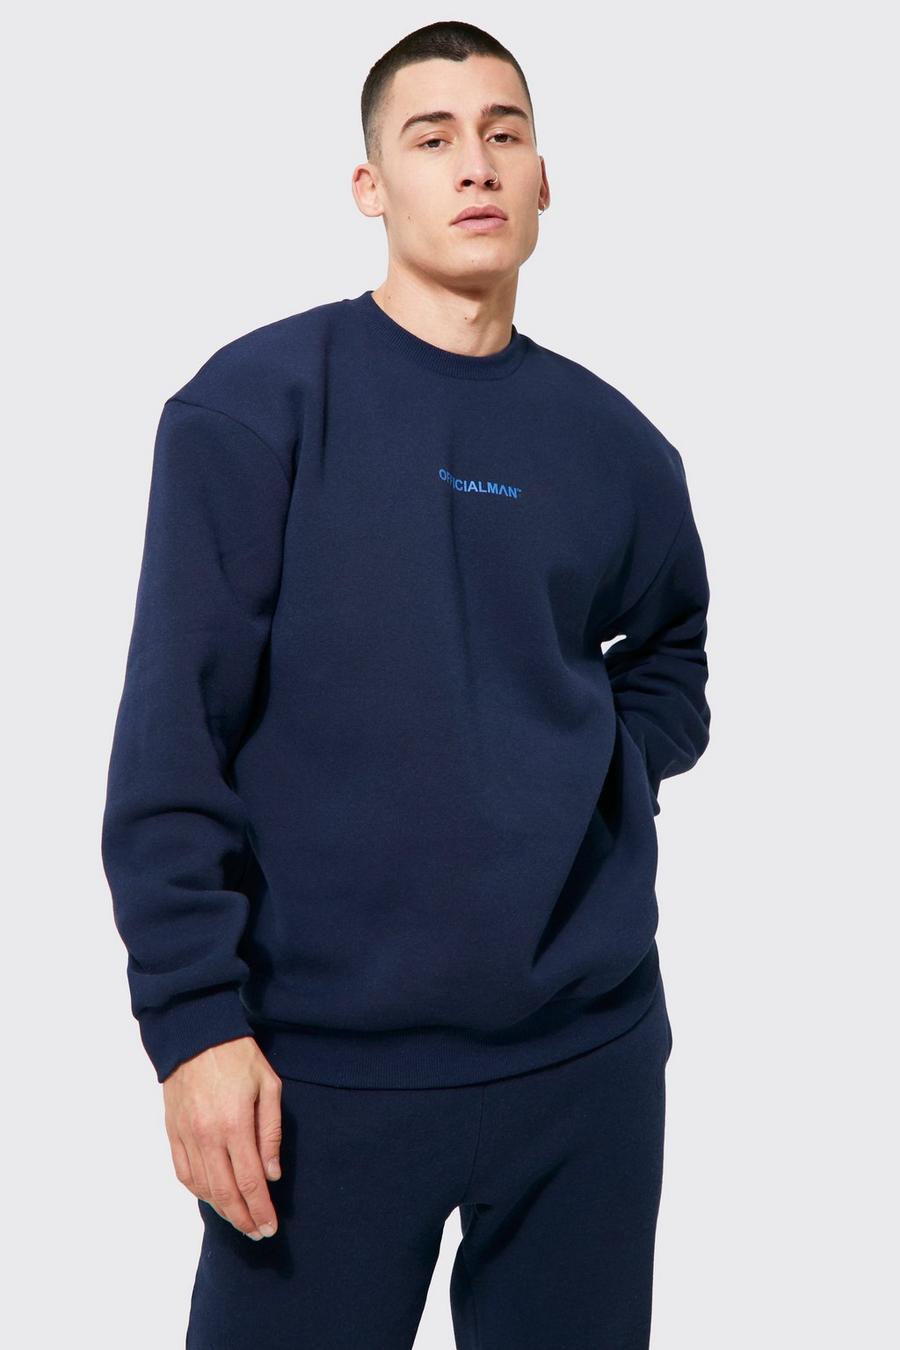 MAN Collection Hoodies & Sweatshirts For Men | boohoo UK